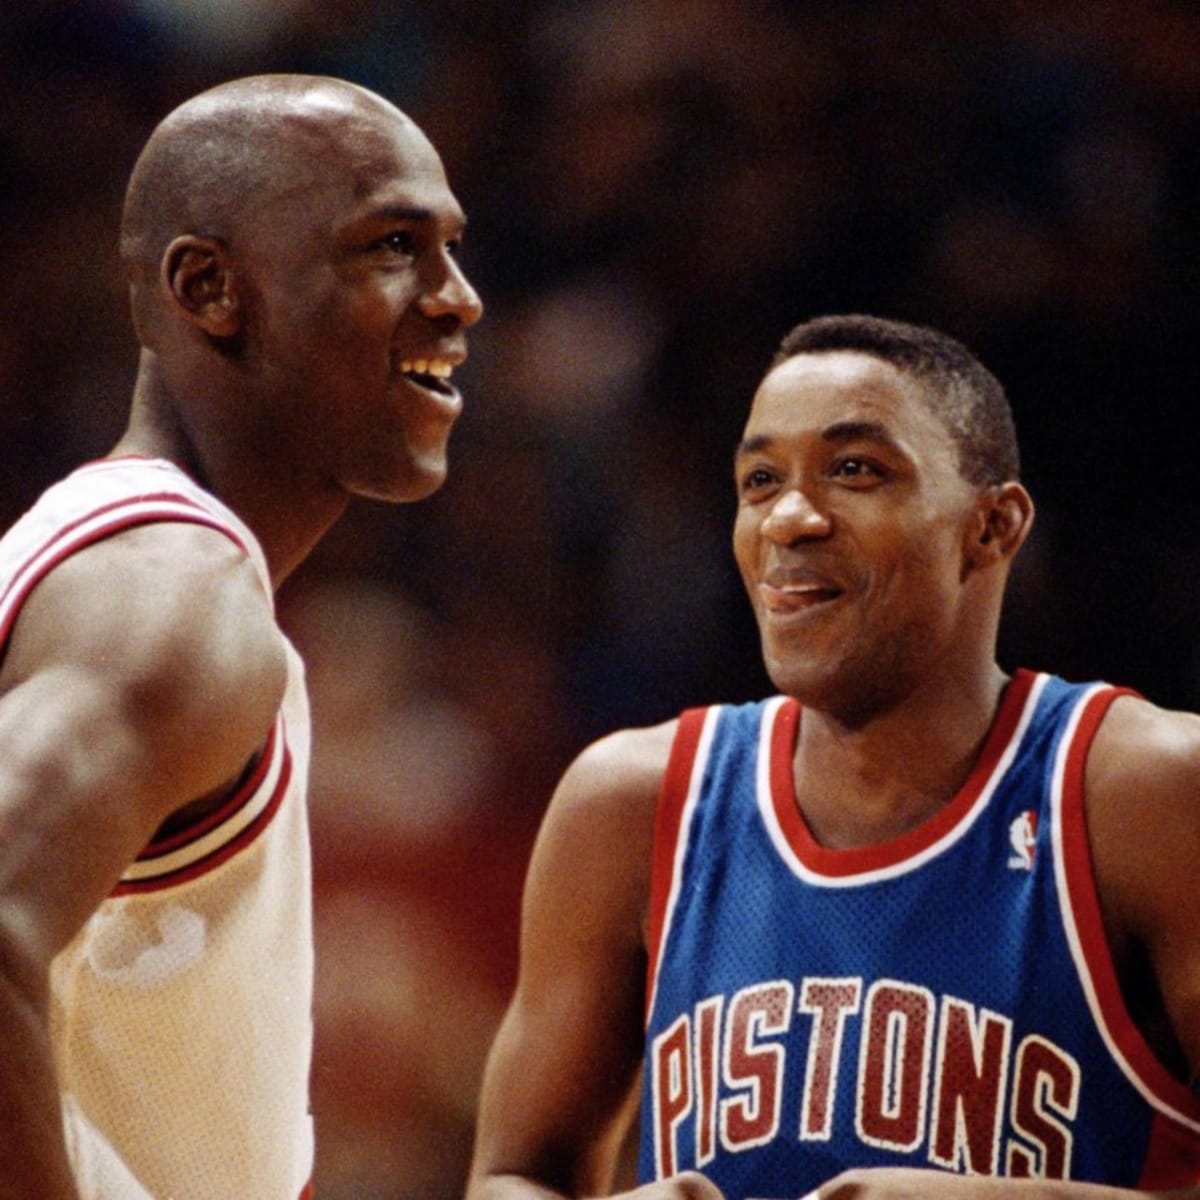 Fans react to Michael Jordan brand on Detroit Pistons uniforms